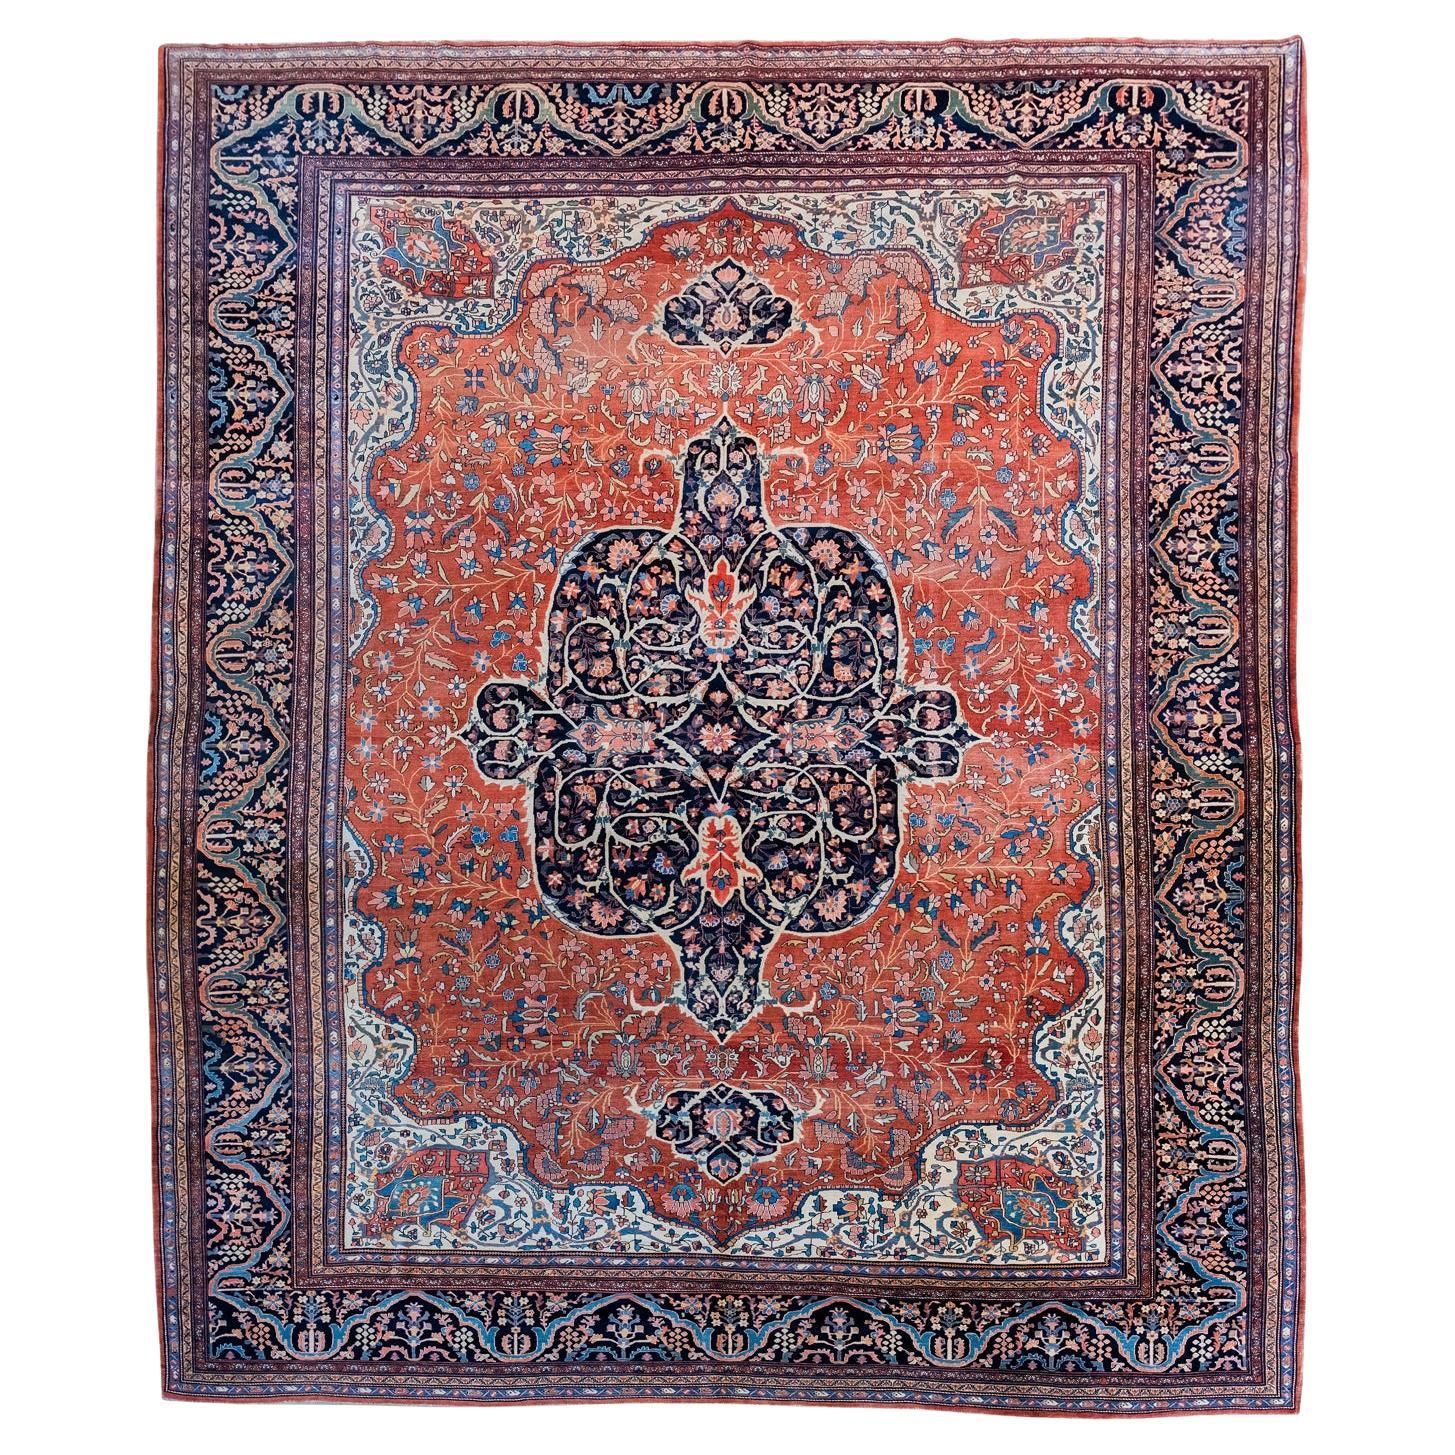 Antique Wool Persian Farahan Carpet, Red, Orange, Indigo, 10’ x 14’ For Sale